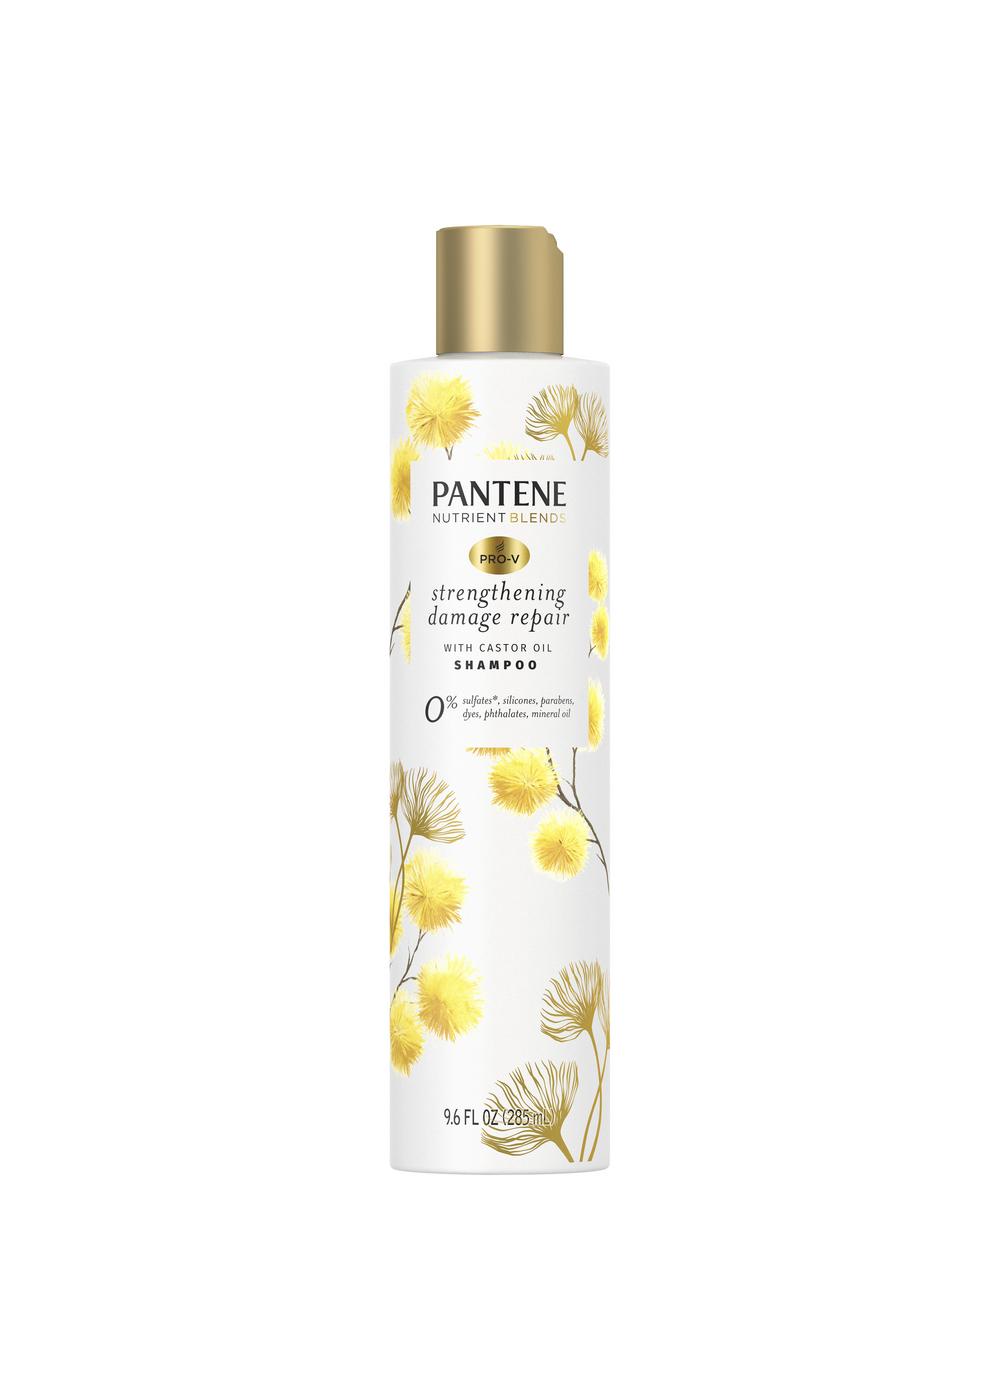 Pantene Nutrient Blends Strengthening Damage Repair Shampoo; image 12 of 16